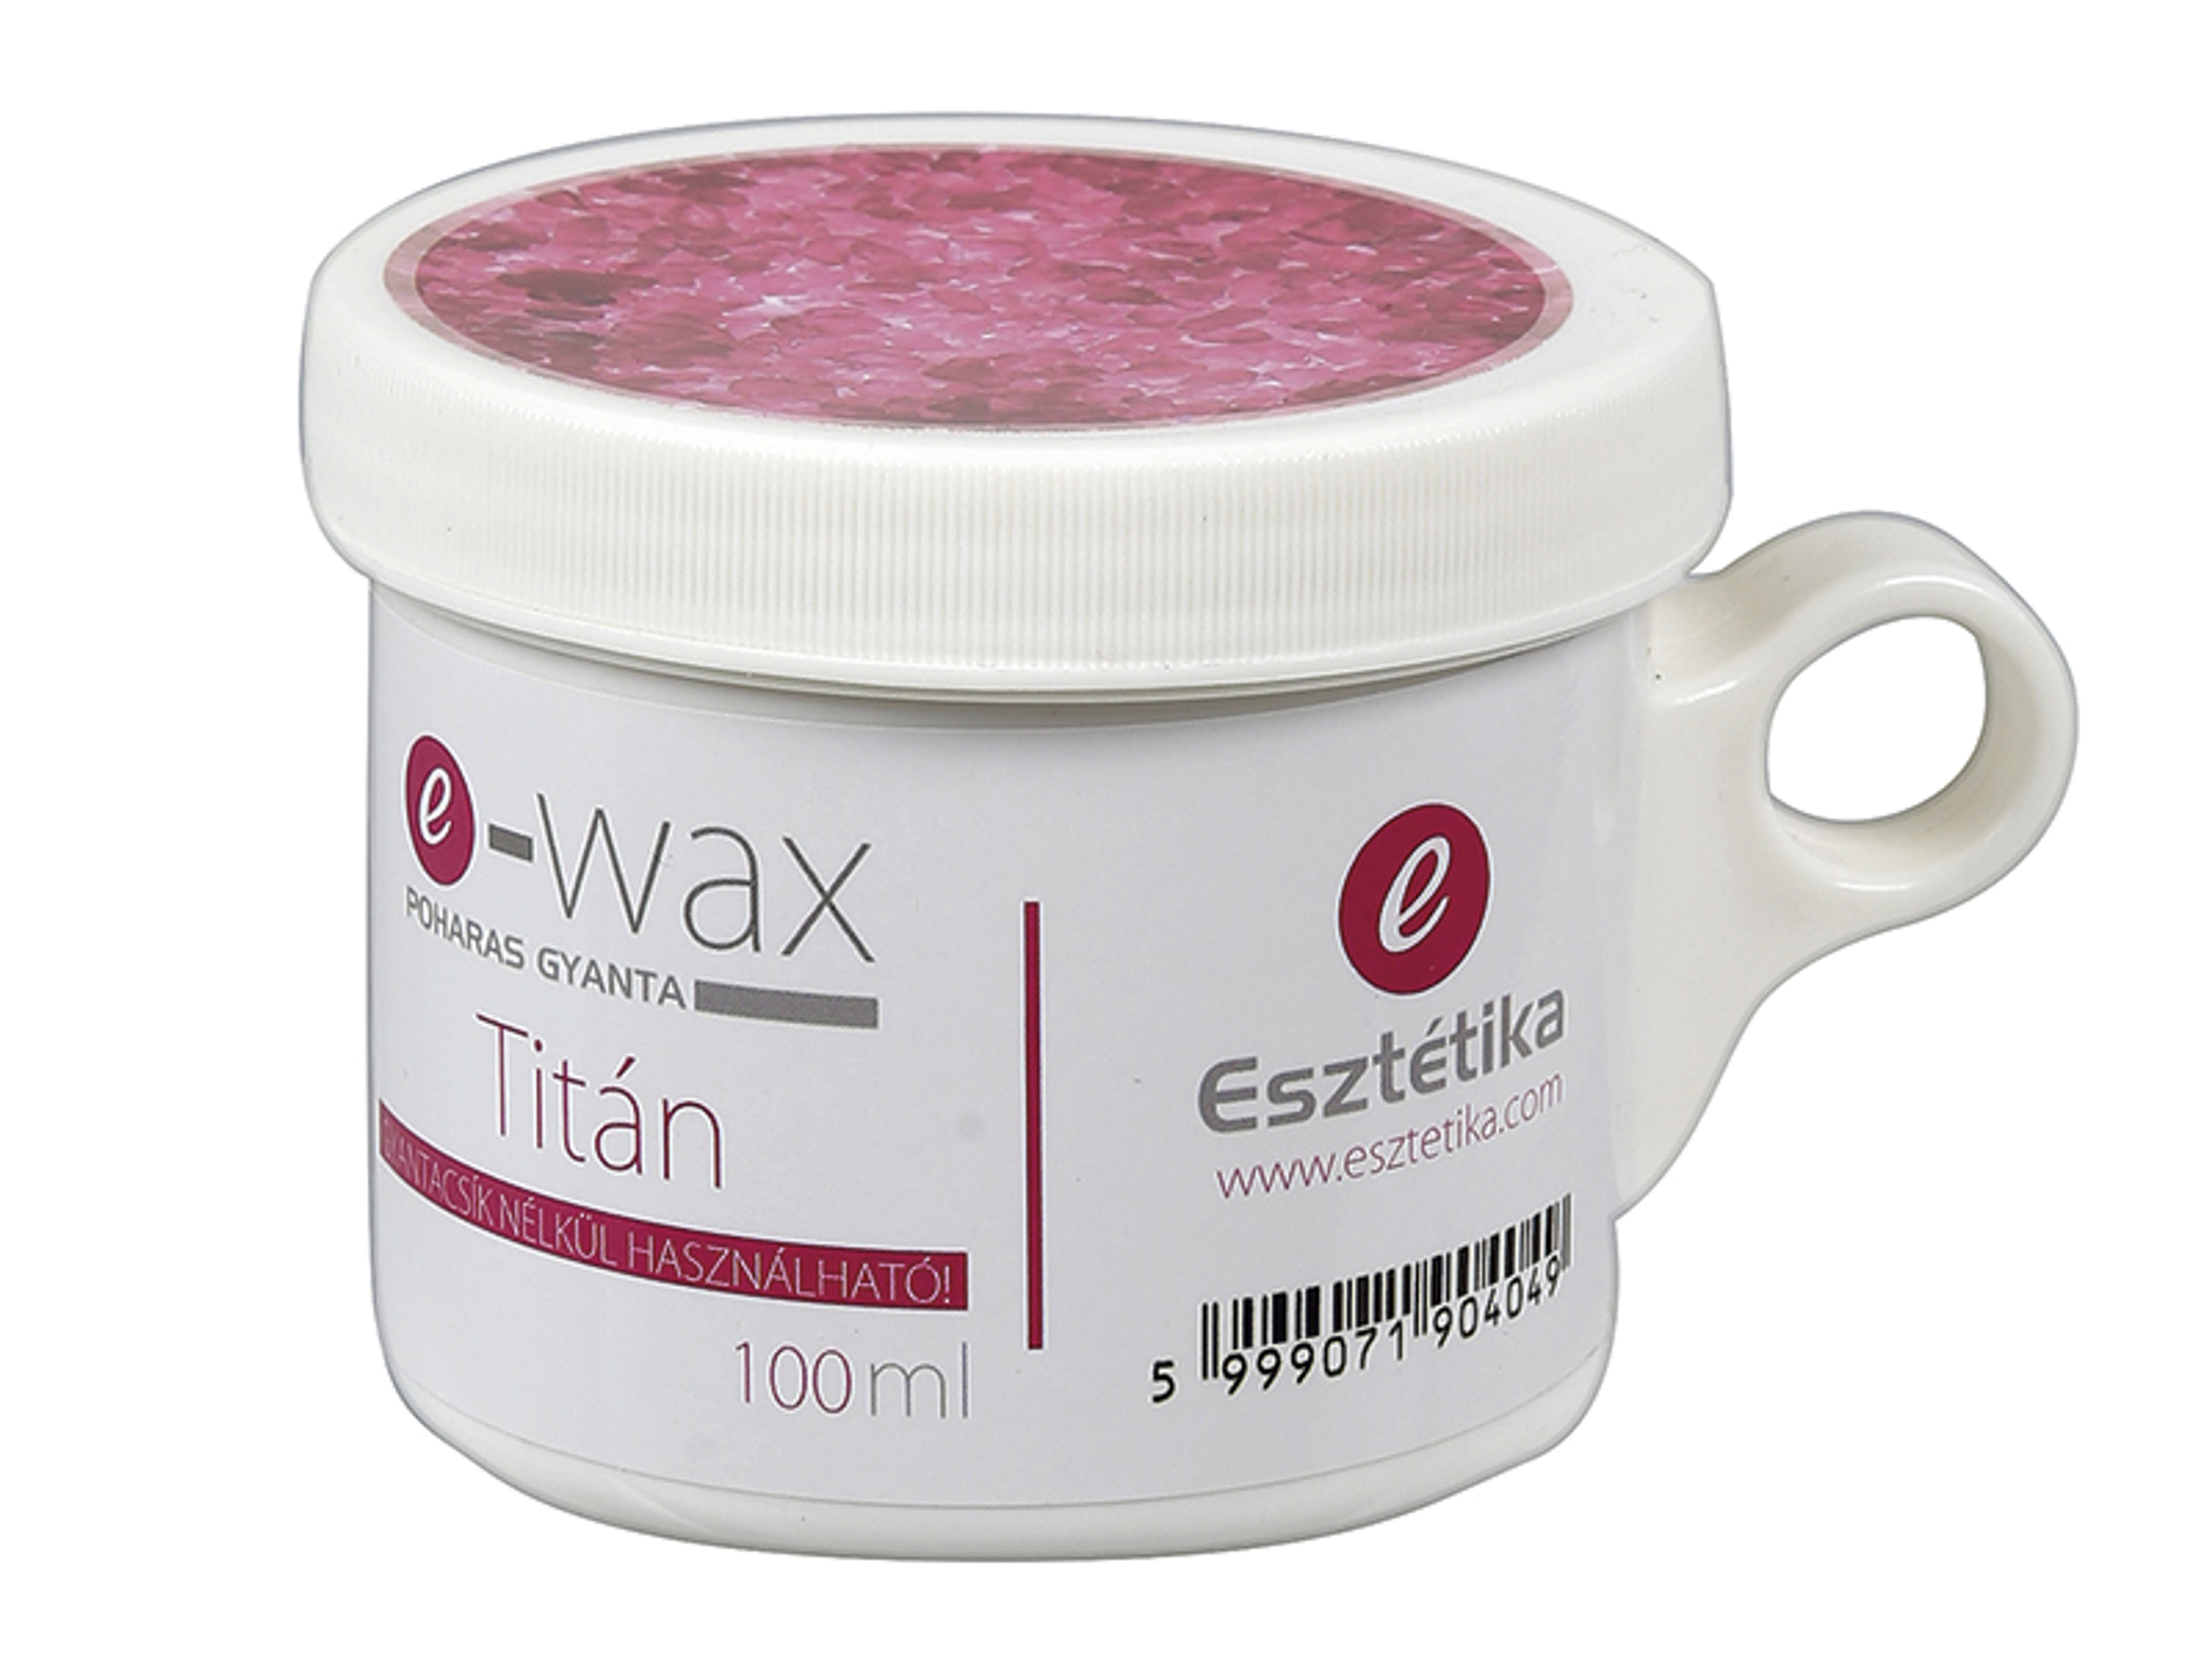 e-Wax Titán poharas gyanta - 100 g